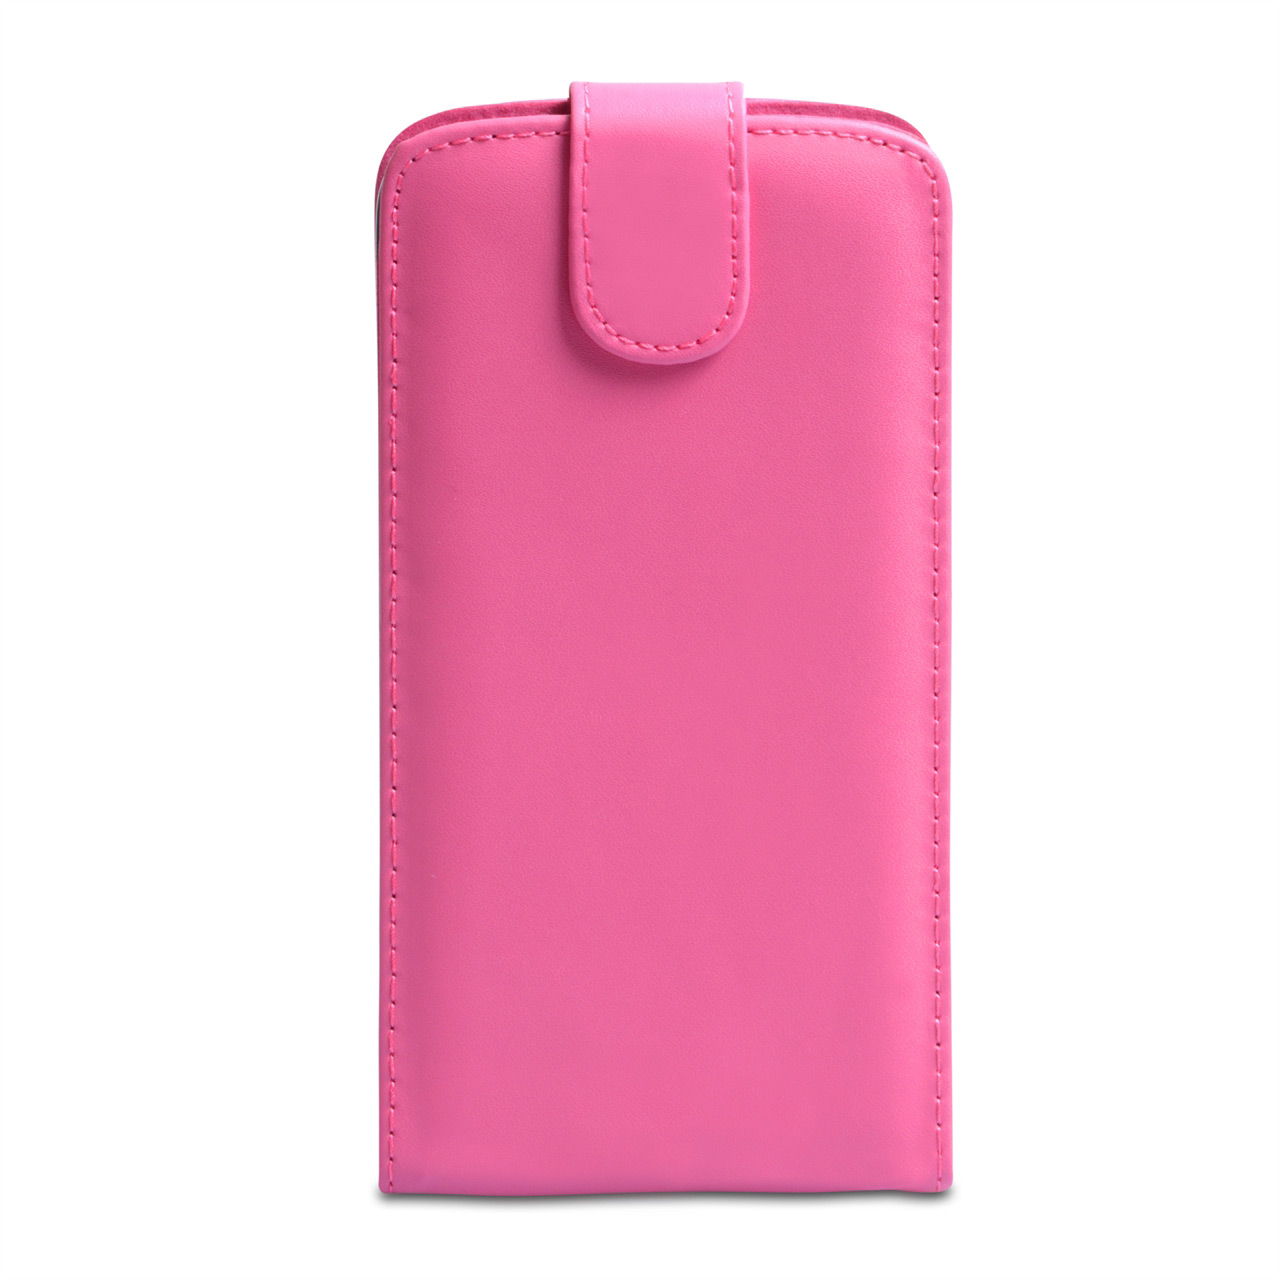 YouSave Samsung Galaxy Mega 6.3 Leather Effect Flip Case - Hot Pink